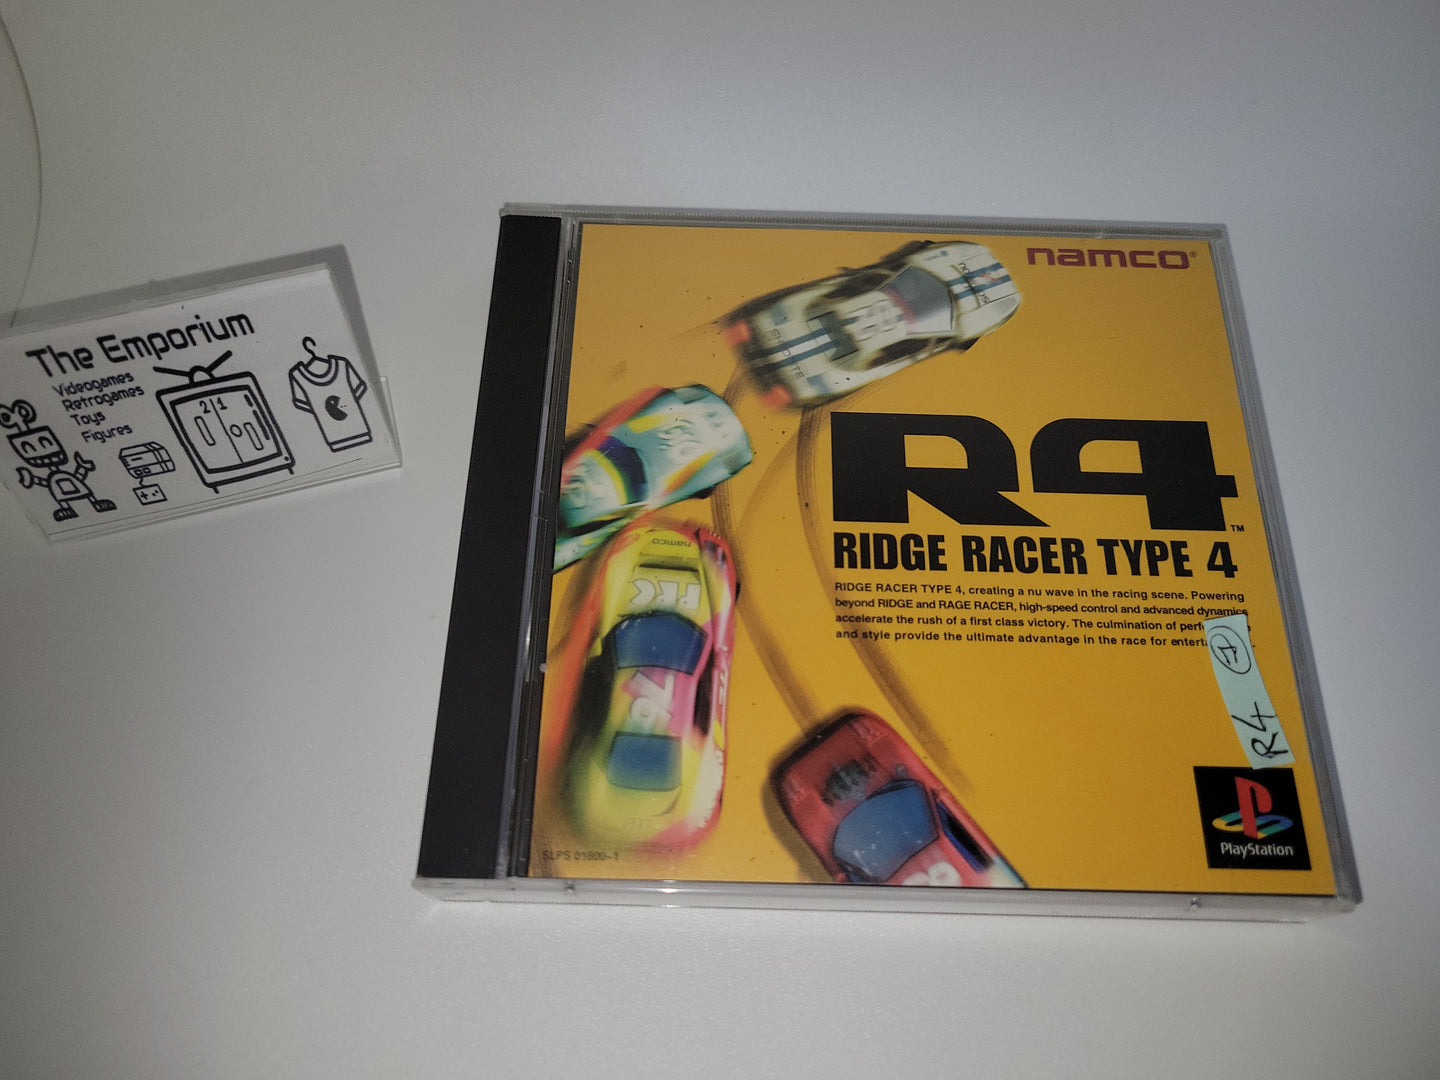 sergio - Ridge Racer Type4 - Sony PS1 Playstation